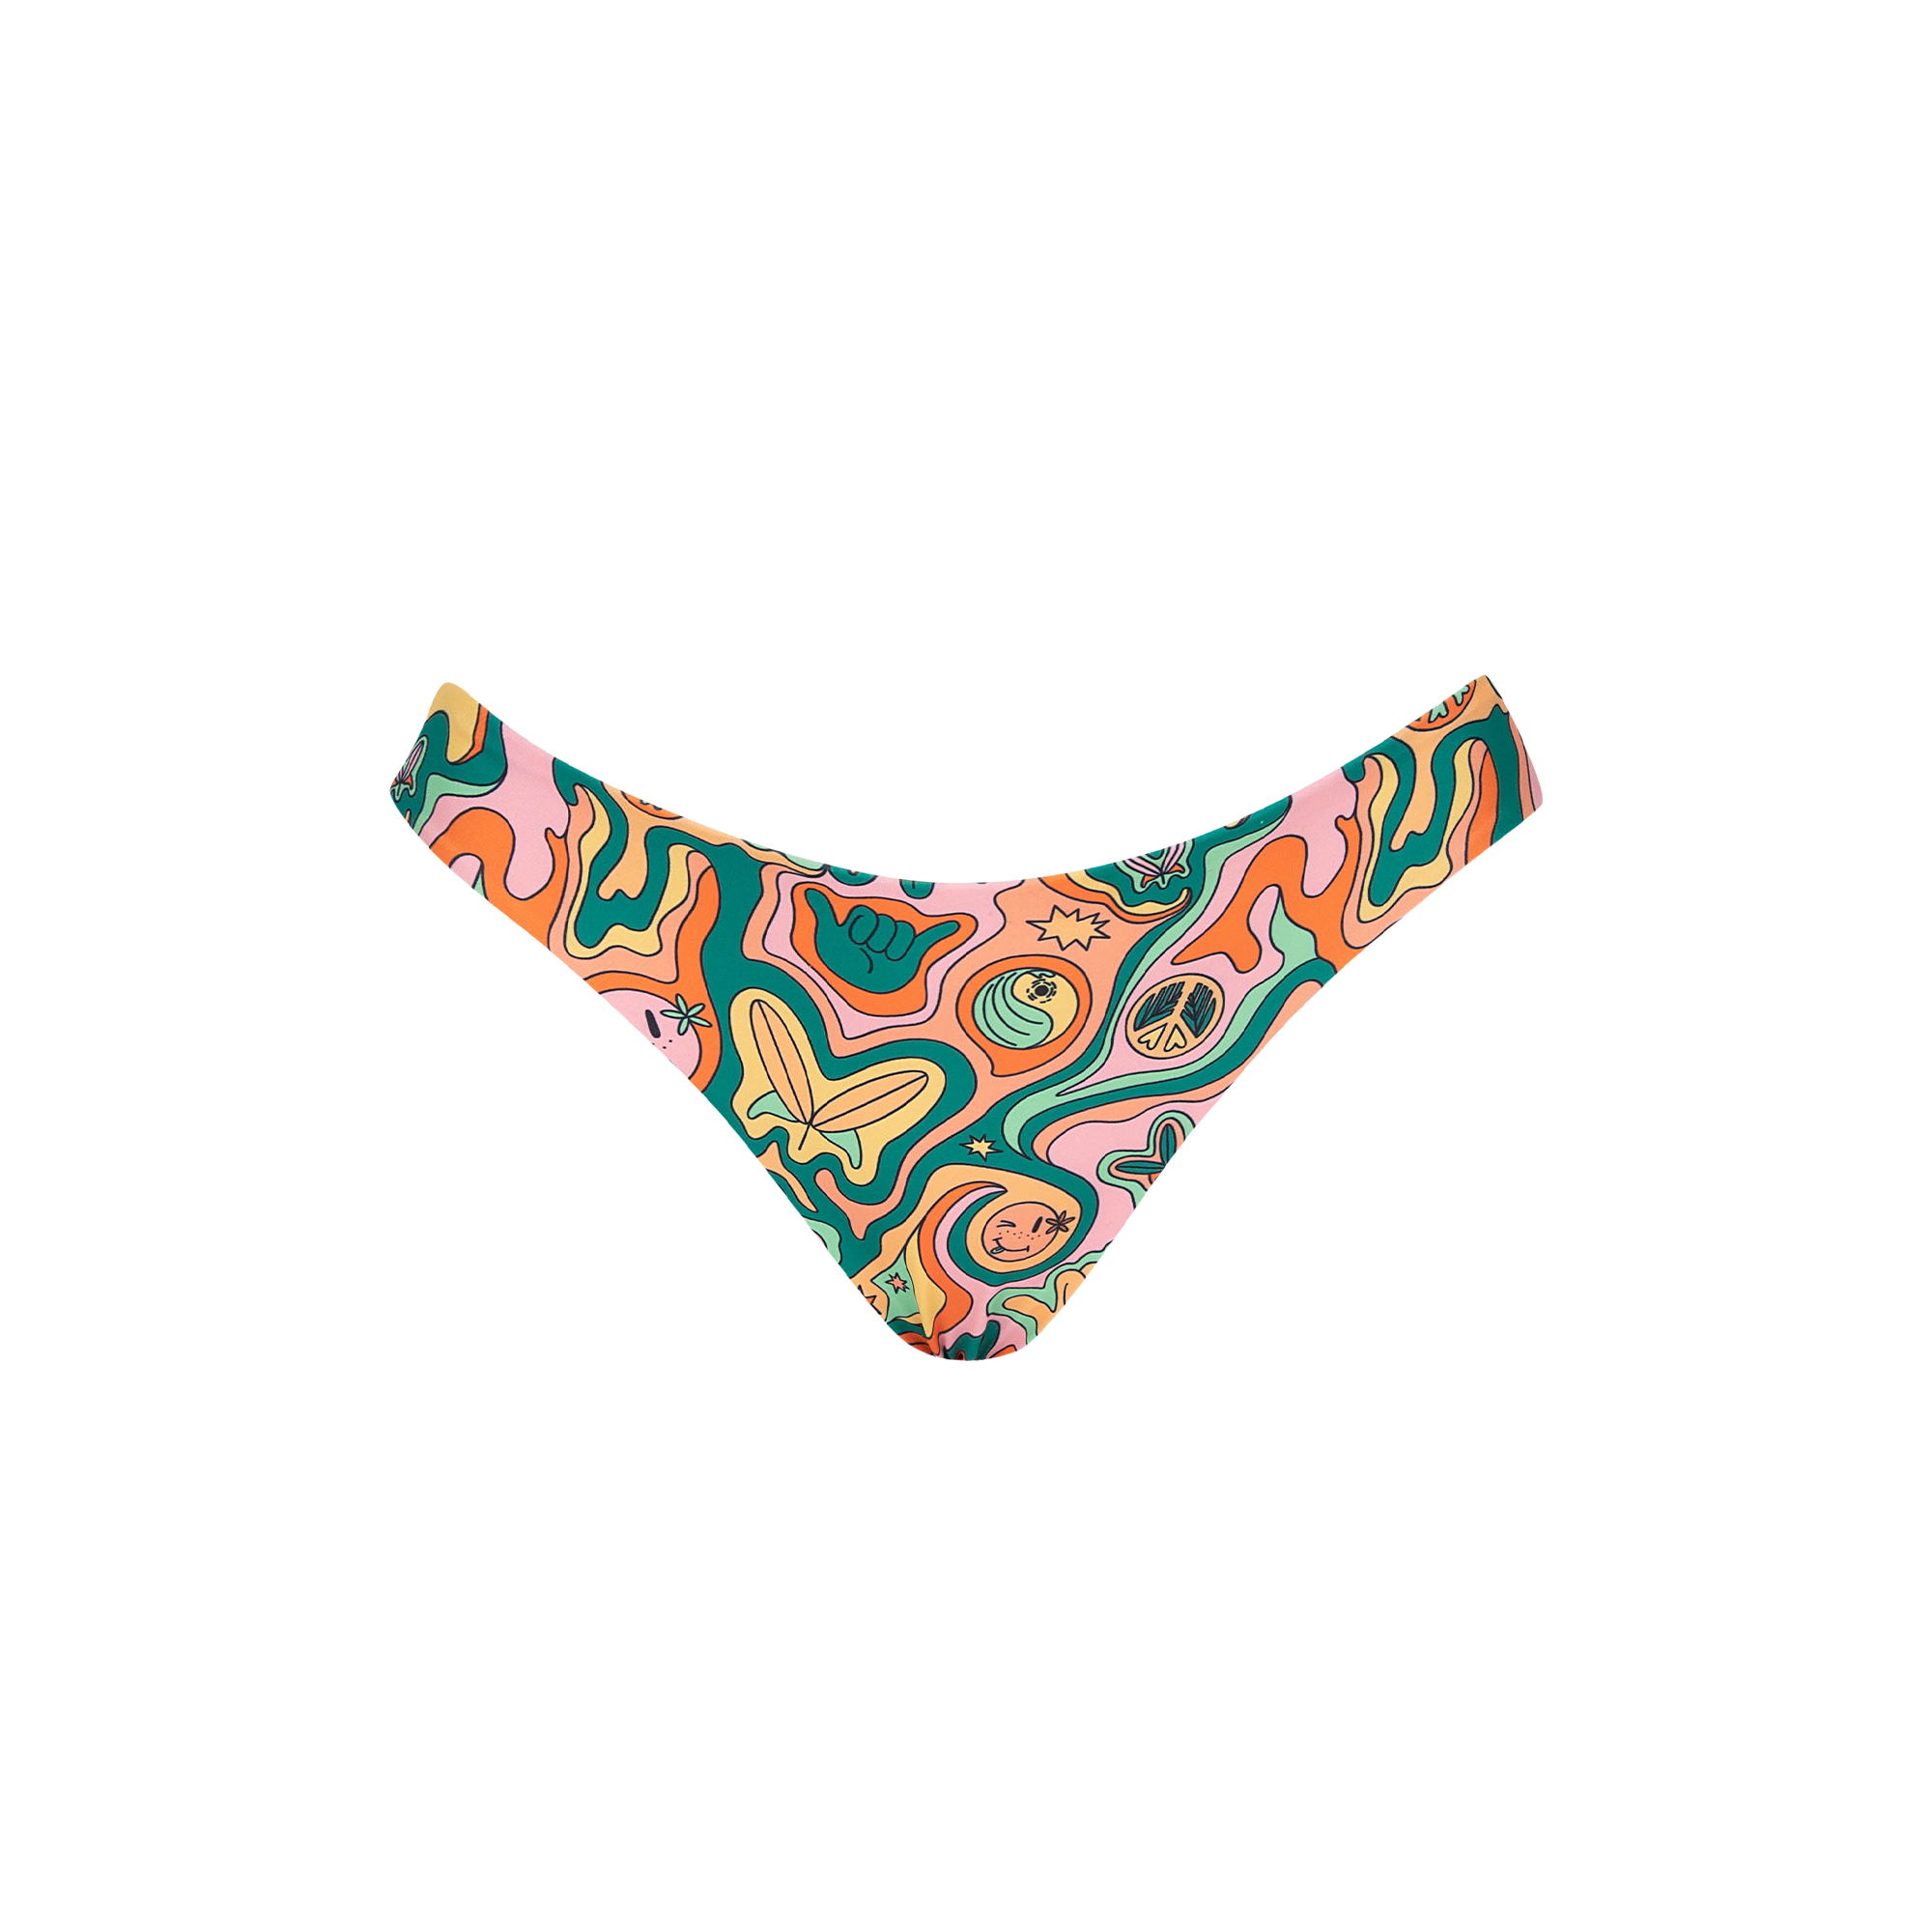 Seafoam Disco - Classic Cheeky Reversible Bikini Bottom